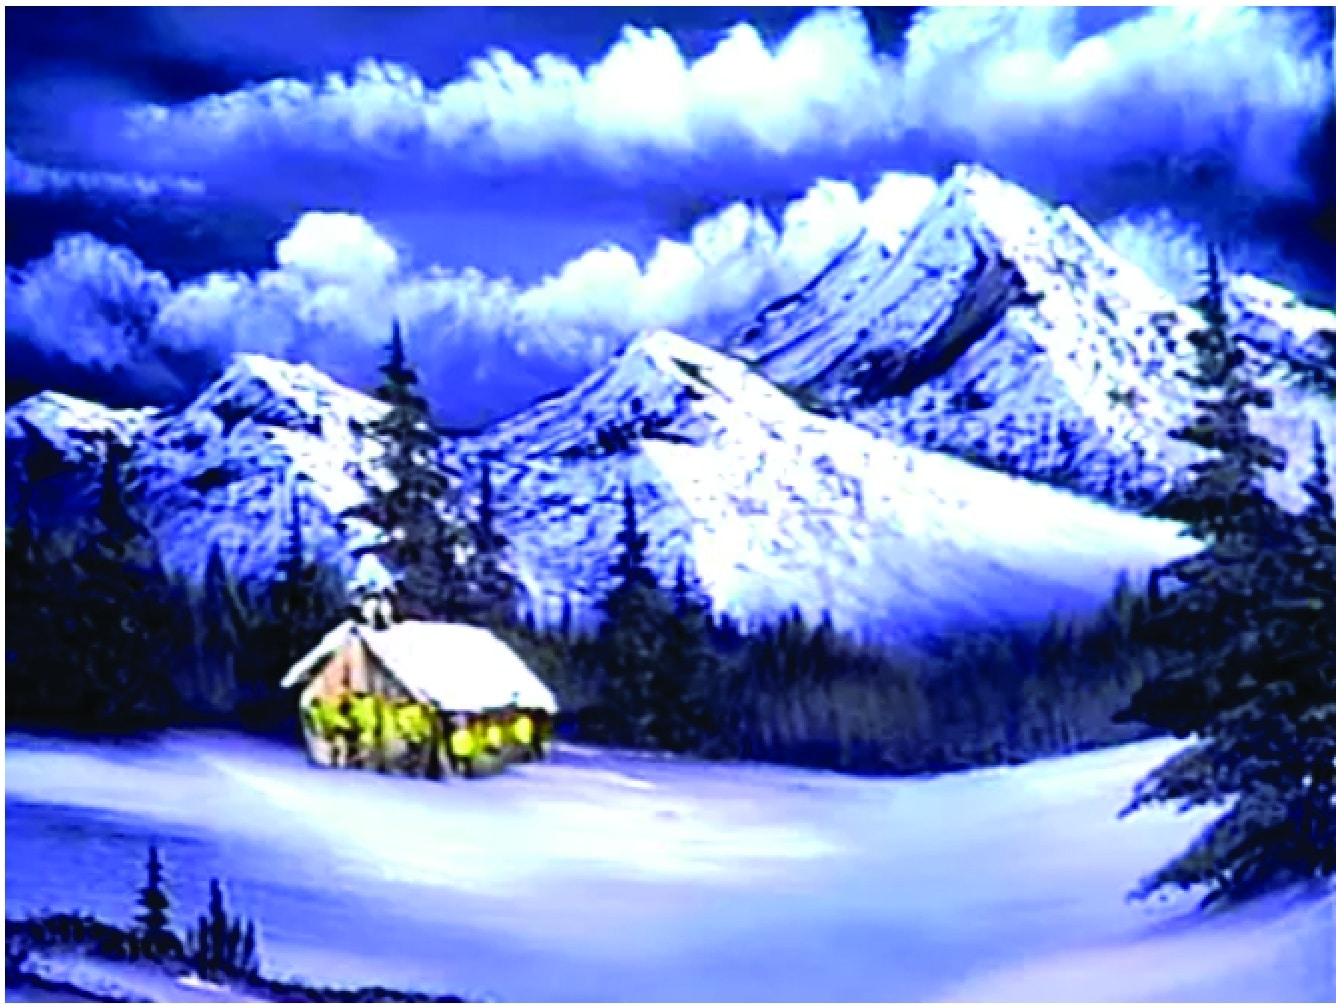 Bob Ross “Christmas Eve Snow” Art Dog Painting